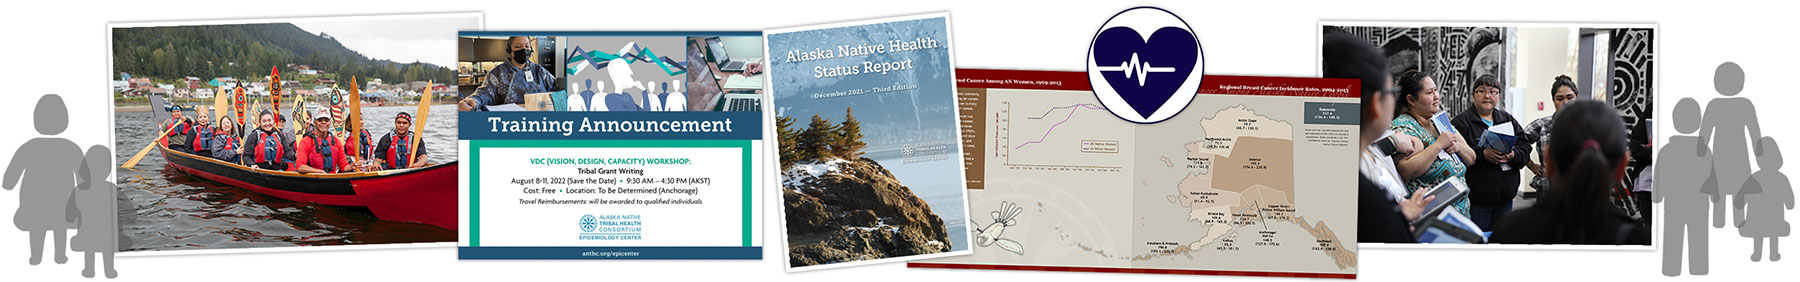 ANTHC Alaska Native Epidemiology Center (EpiCenter) What We Do image